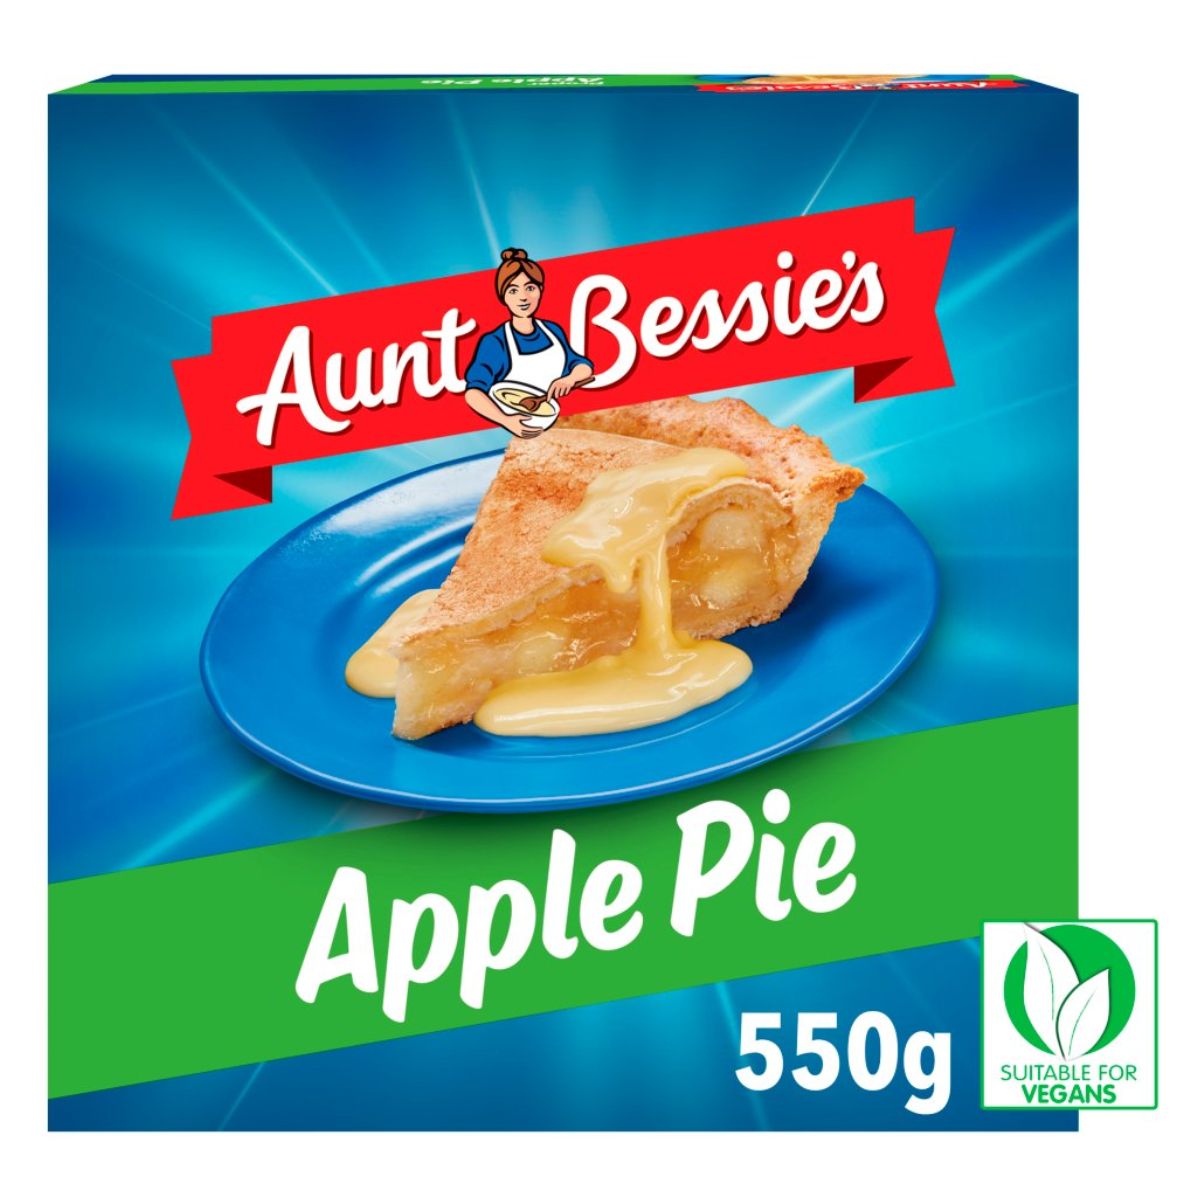 Audrey Aunt Bessies - Proper Apple Pie - 550g.